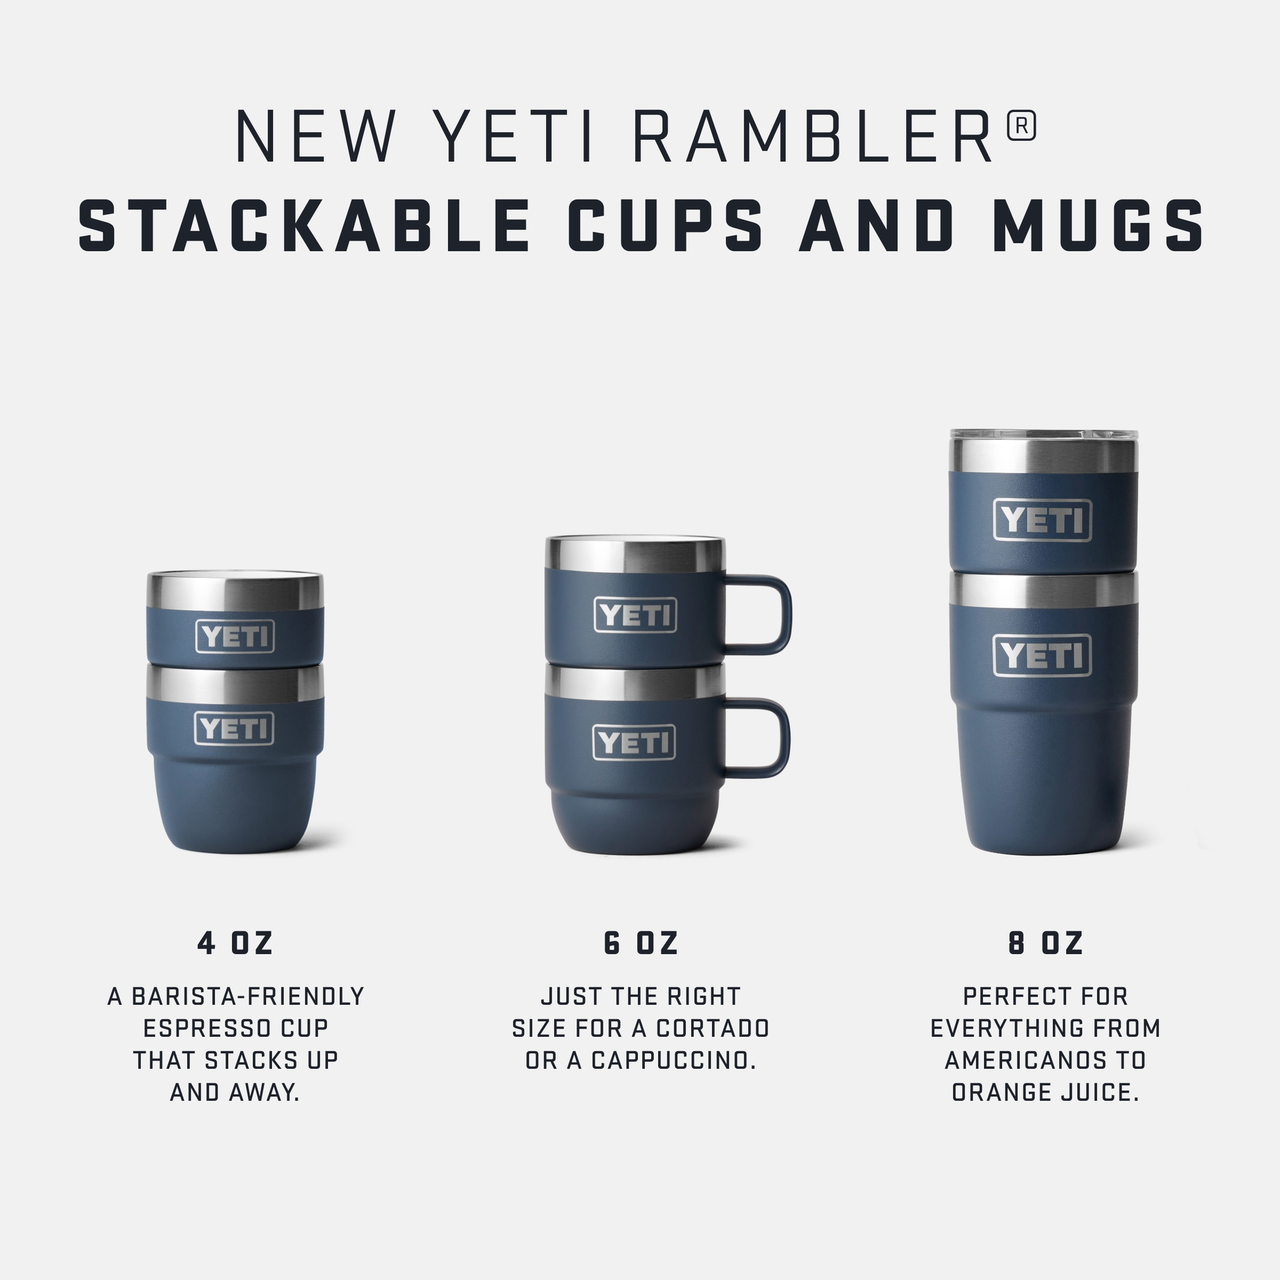  YETI Rambler 6 oz Stackable Mug, Stainless Steel, Vacuum  Insulated Espresso/Coffee Mug, 2 Pack, White: Home & Kitchen